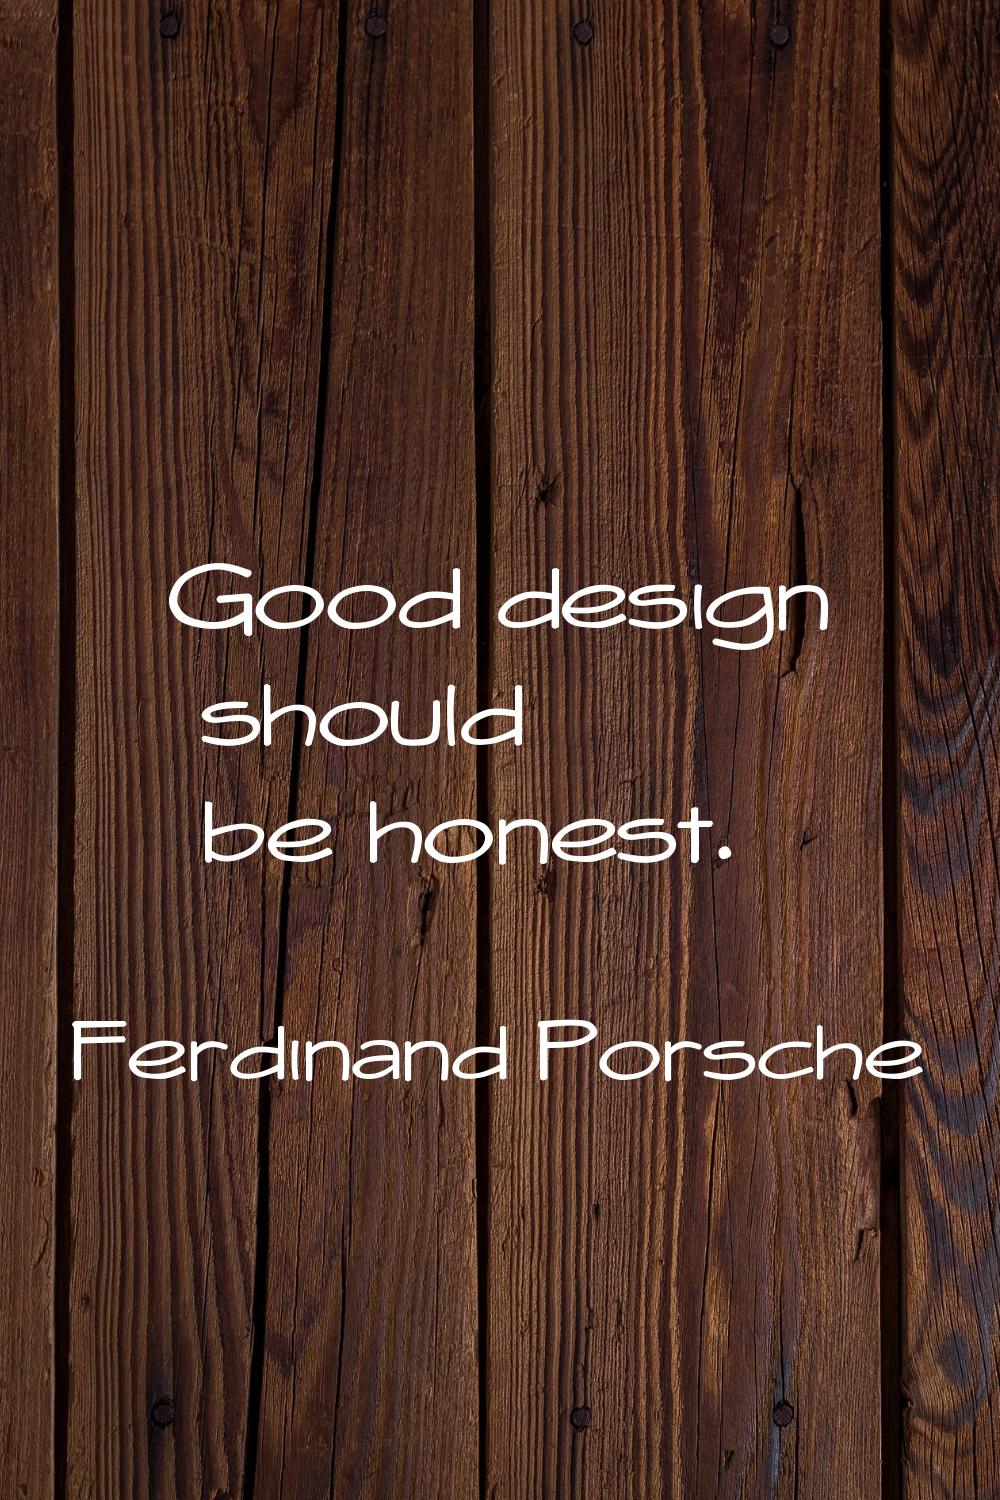 Good design should be honest.